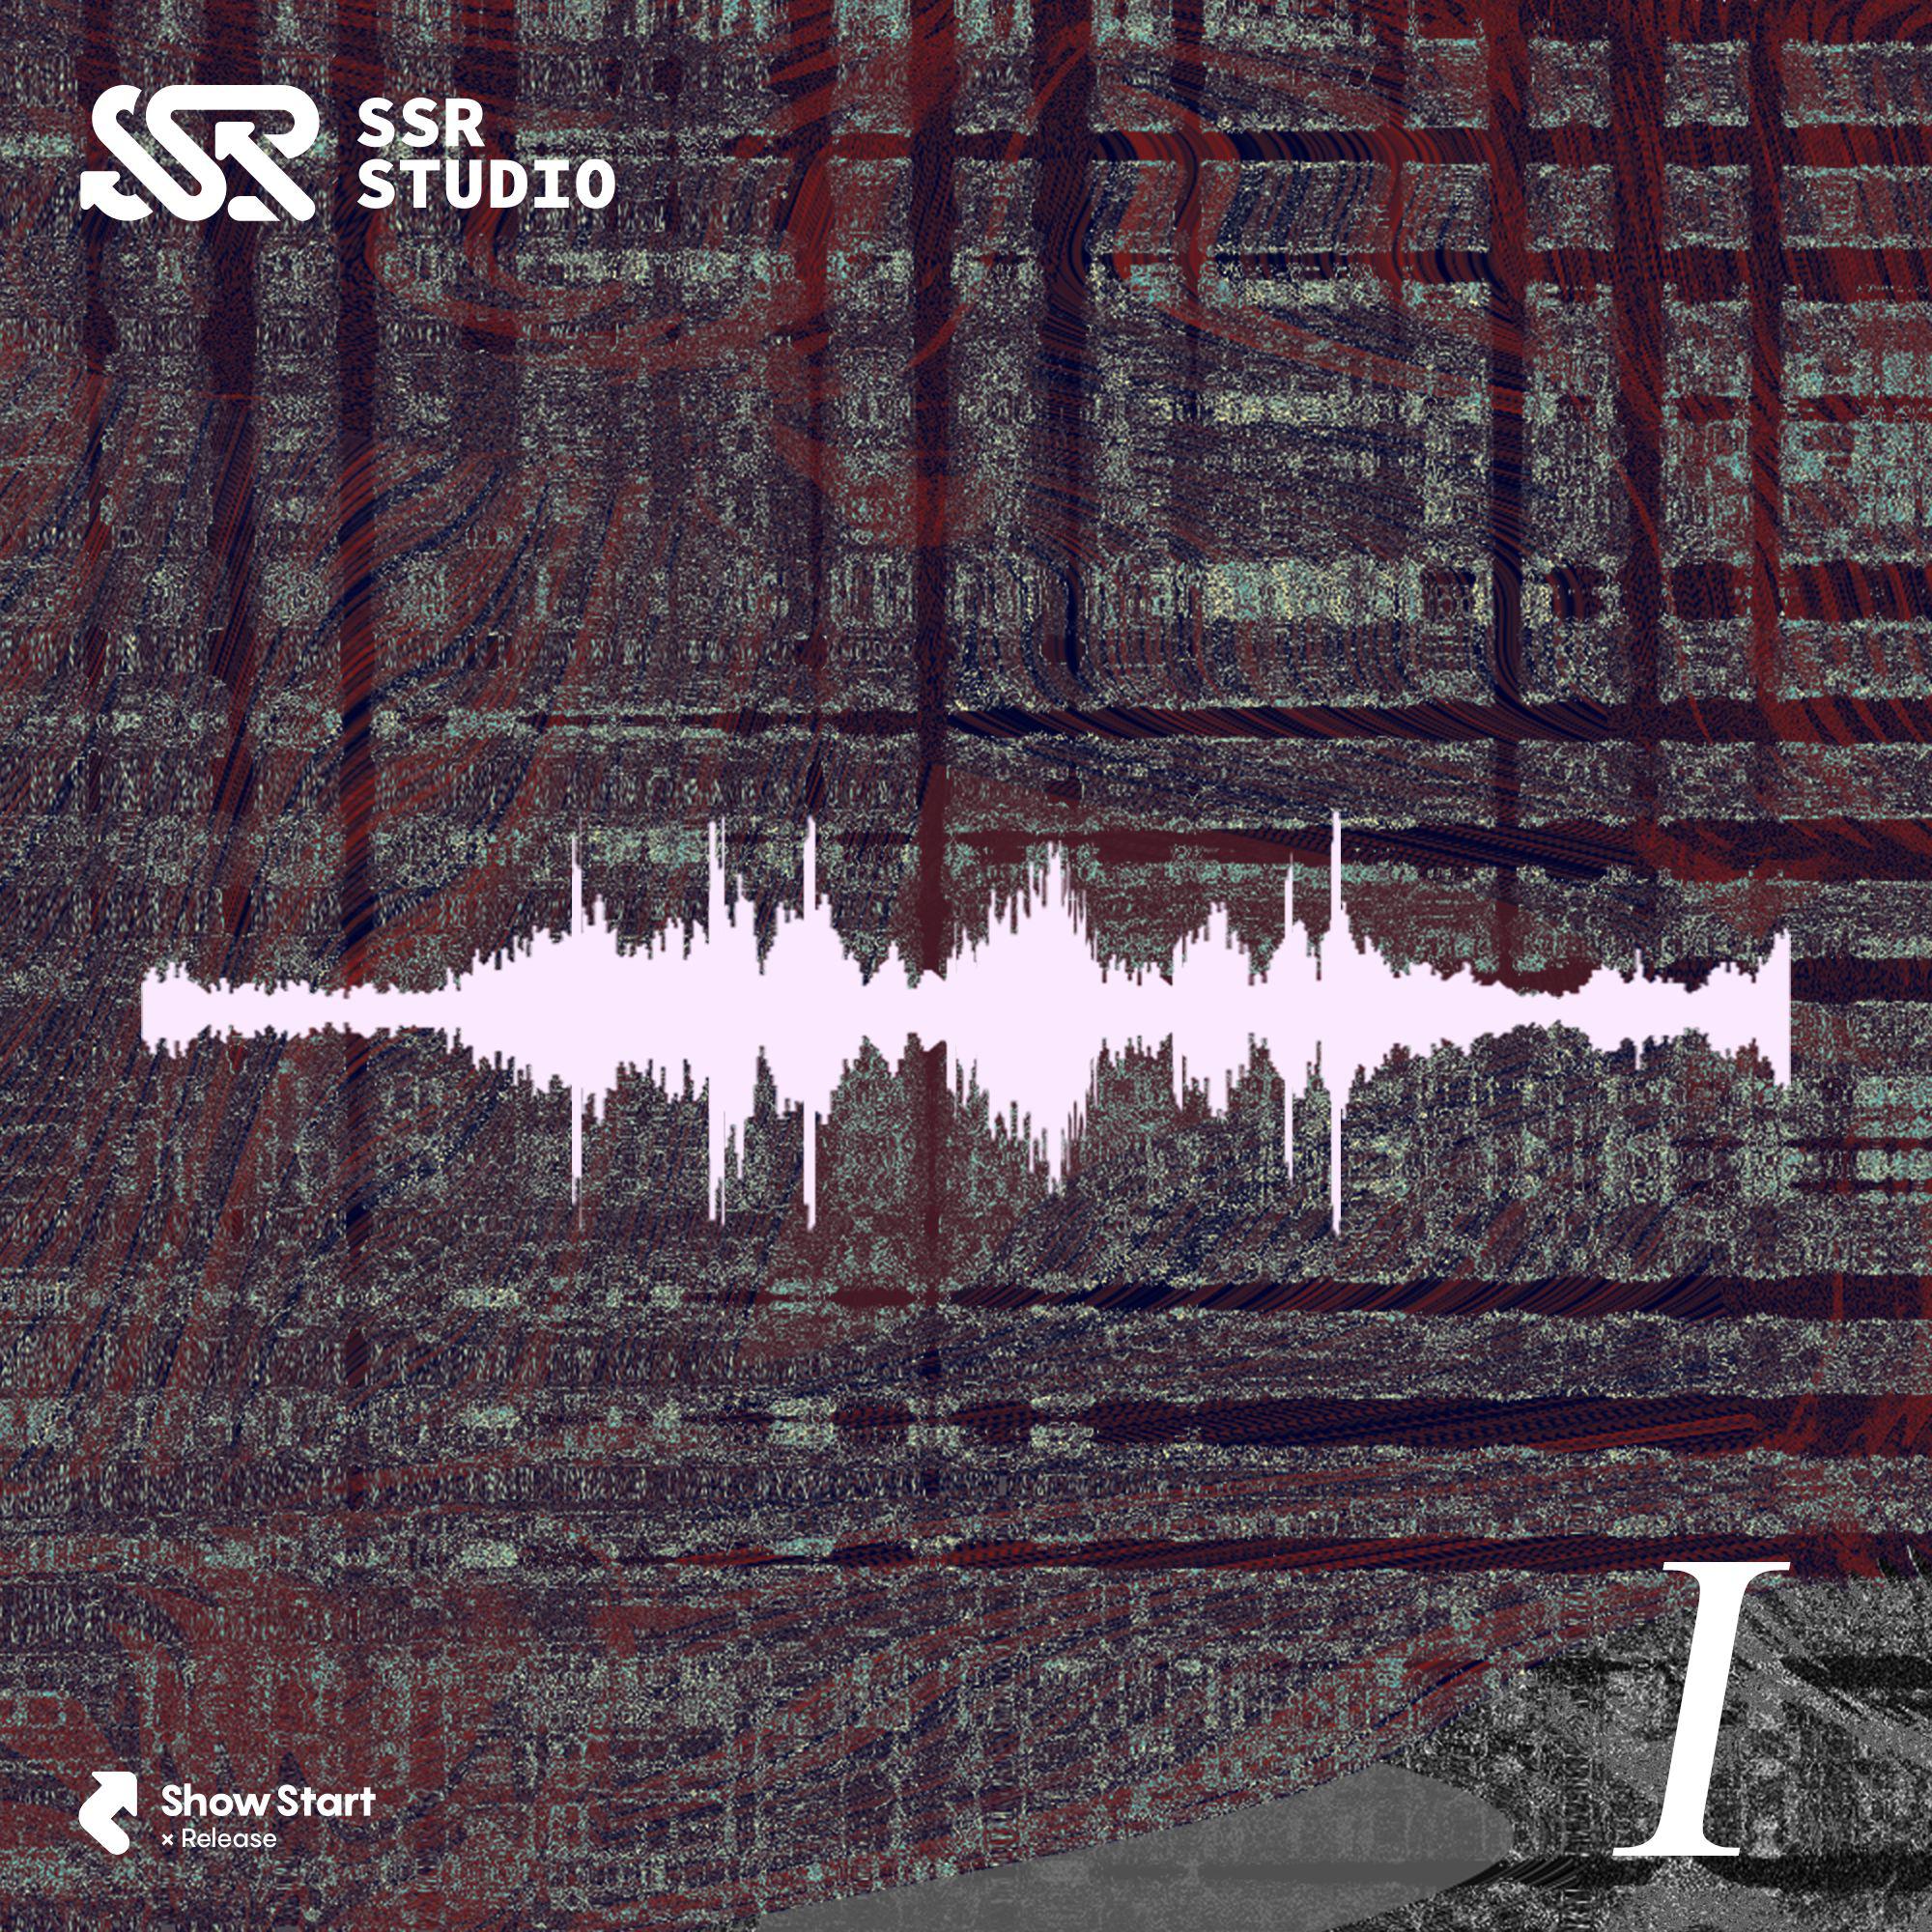 SSR Studio - 【FREE】Hyperpop x Lil Uzi Vert type beat 